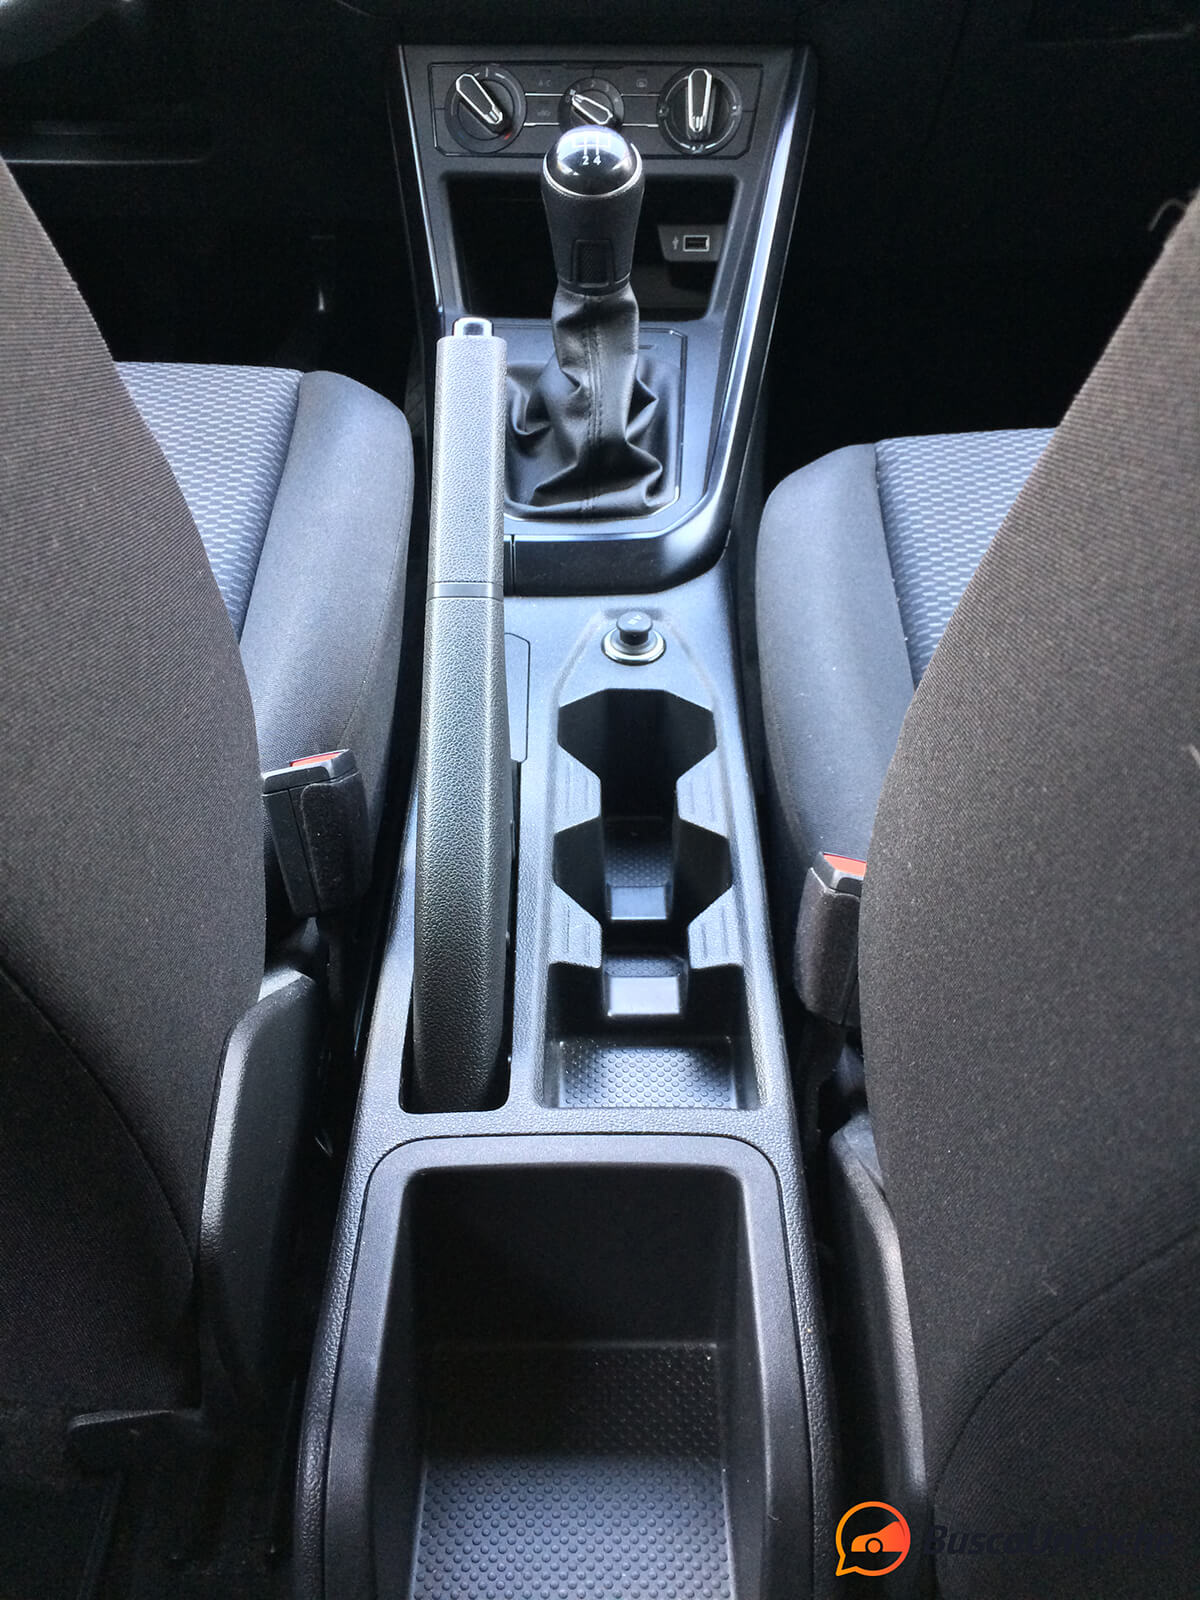 Volkswagen Polo 2018 1.0 EVO: consola central